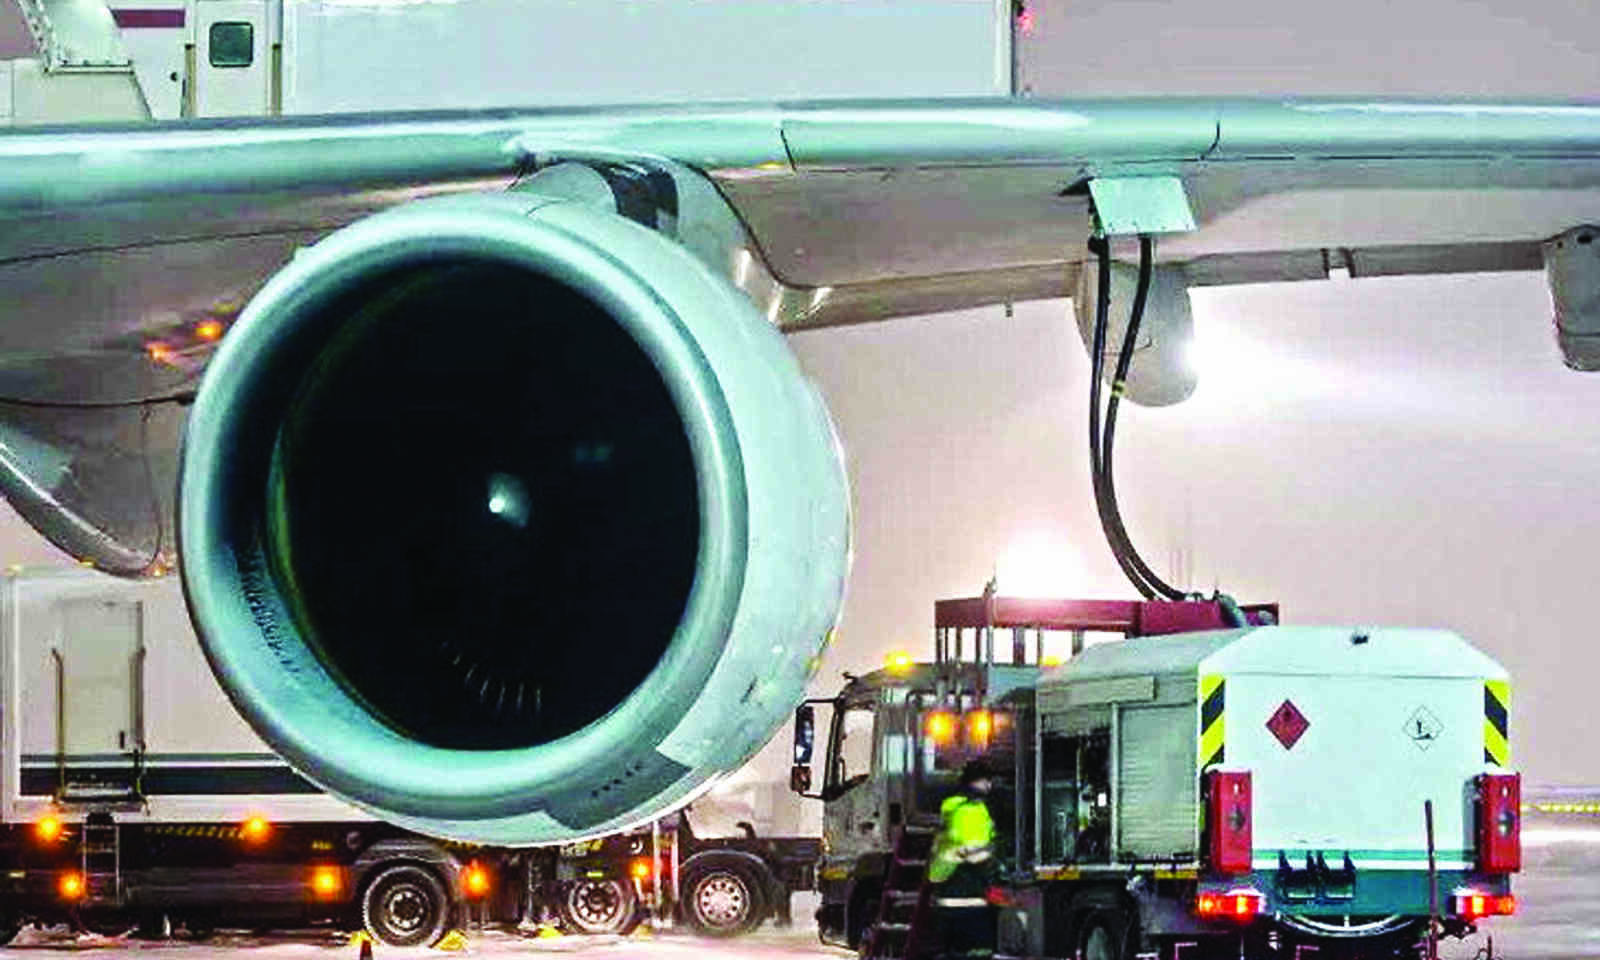 aviation turbine fuel price up marginally, rates at record high